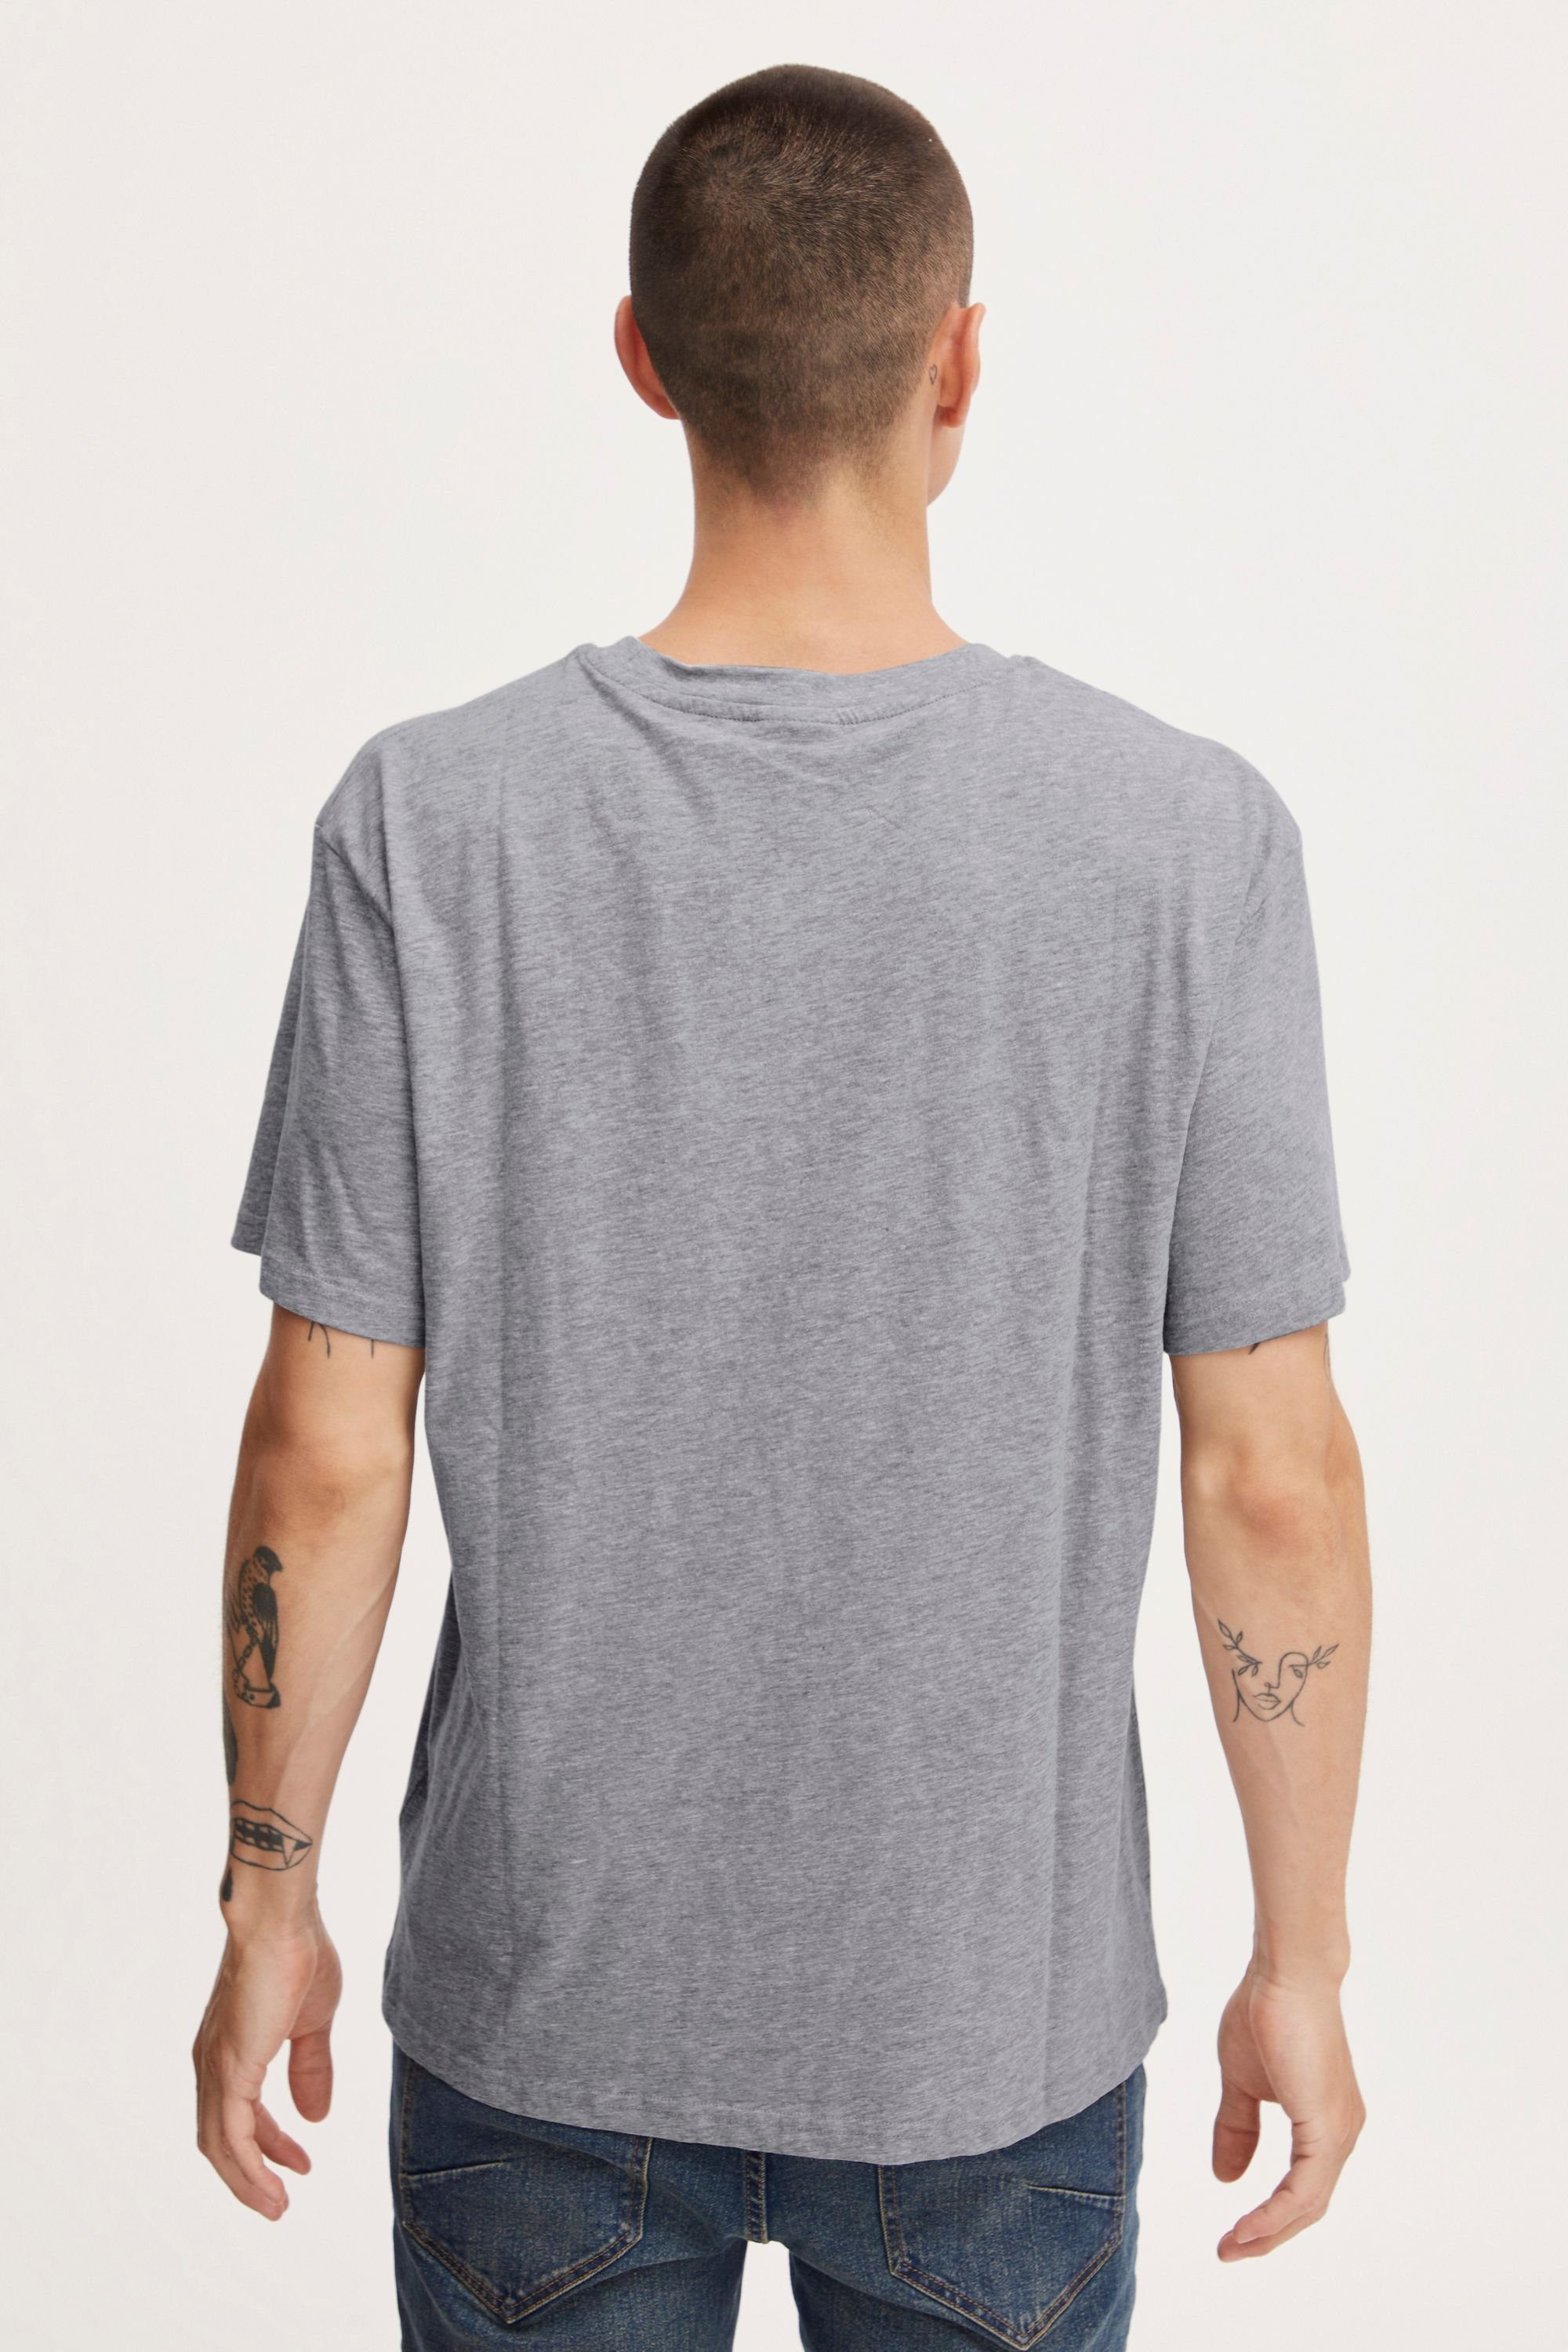 (1541011) Light SDDurant Grey T-Shirt 21107372 Melange S !Solid